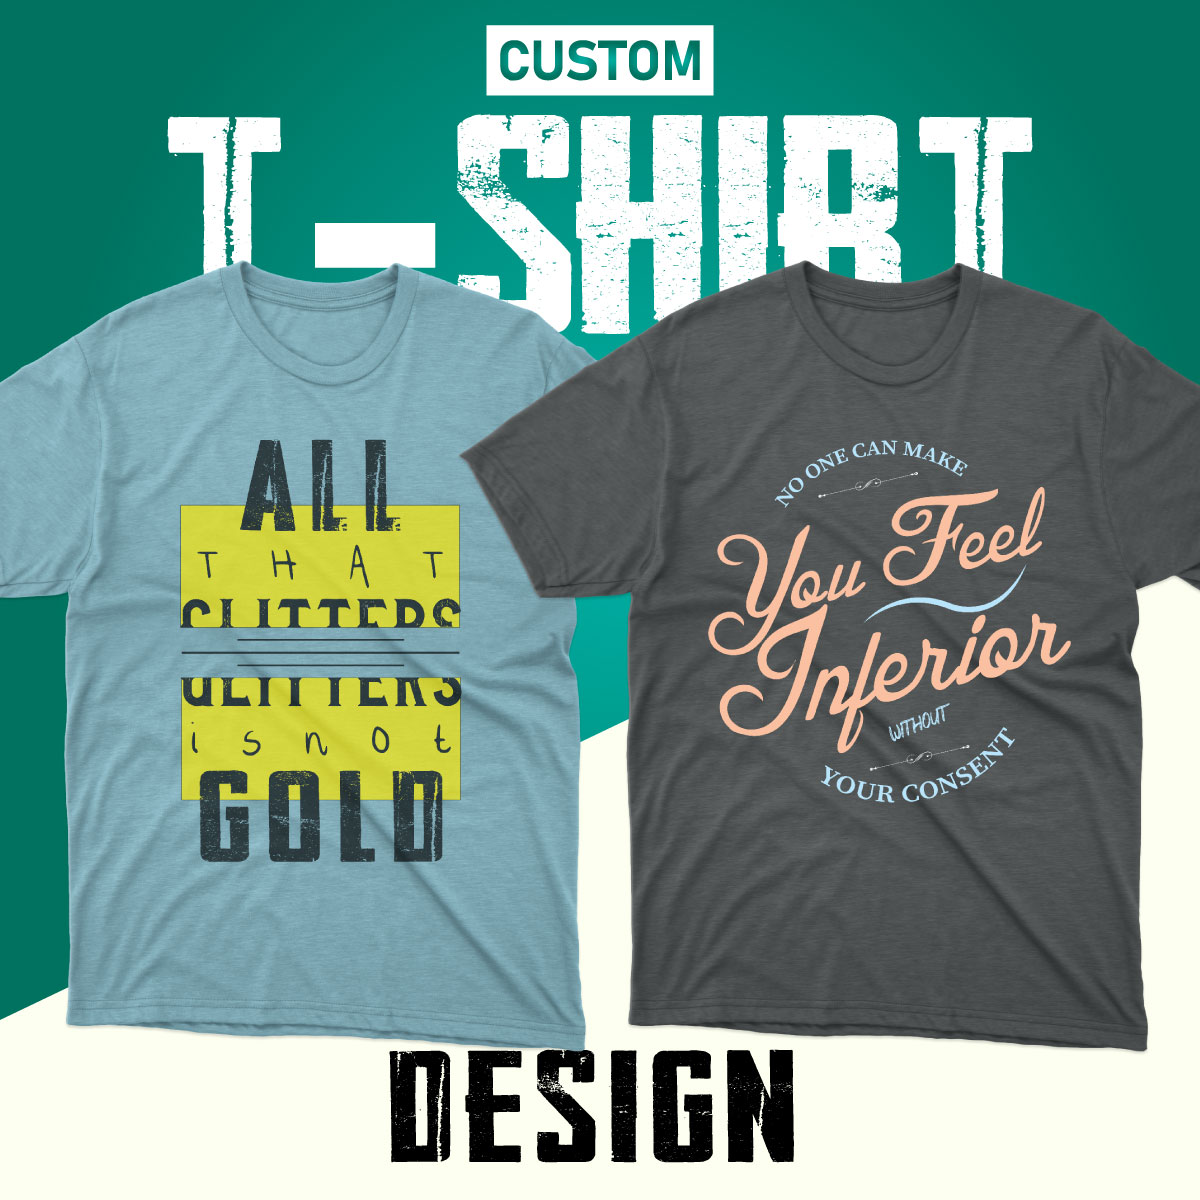 Custom Typography T-Shirt Design Bundles cover image.